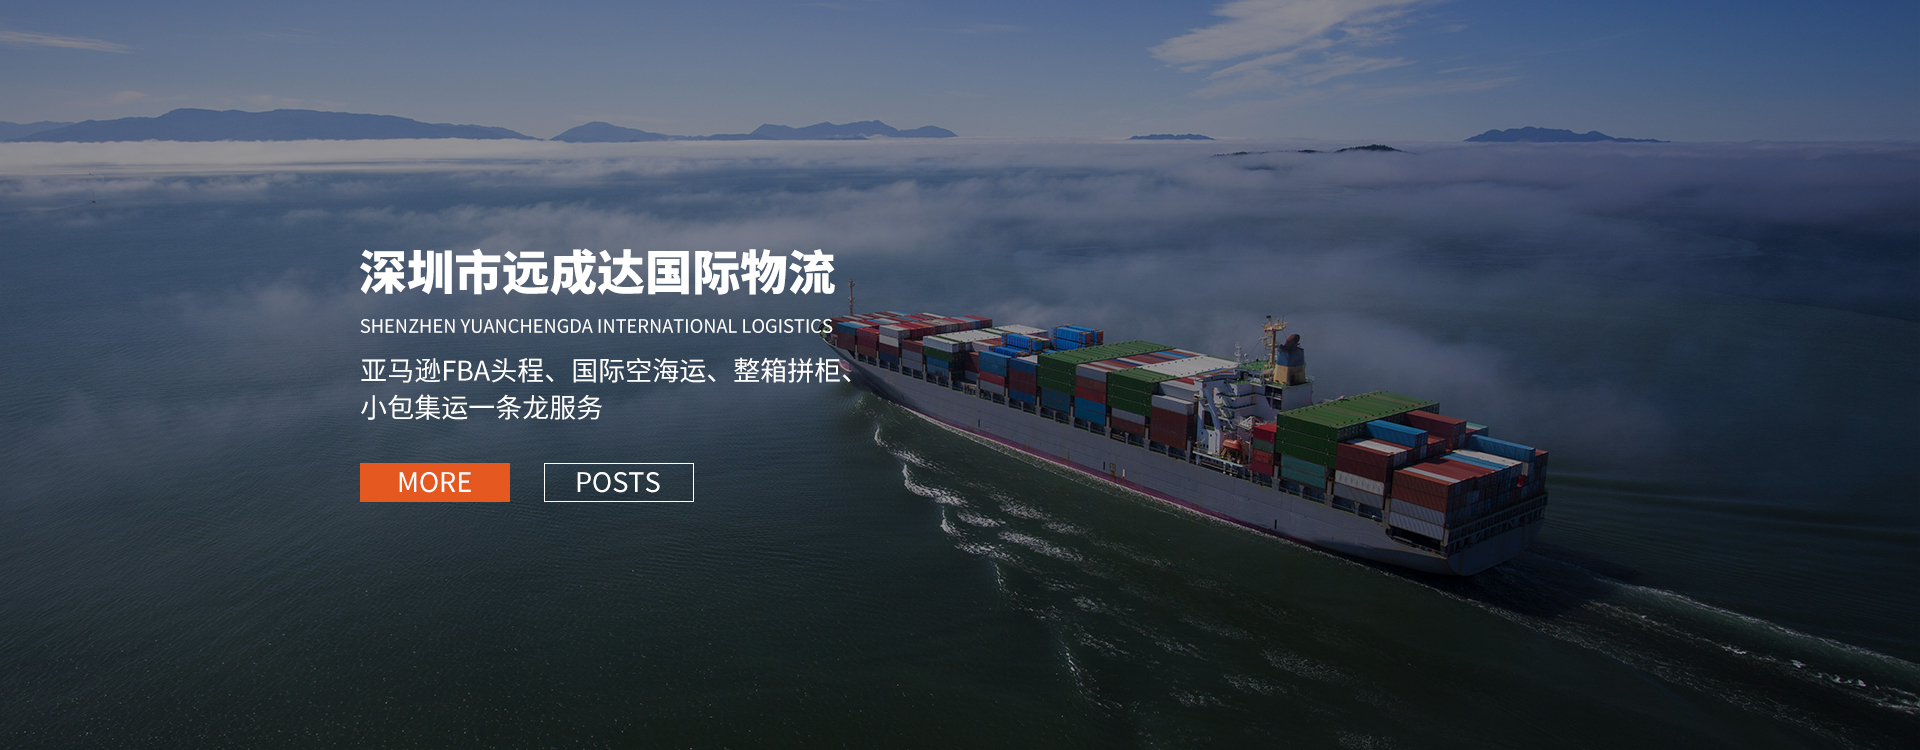 glo-dgf-text-generic-ocean-freight.web.796.448